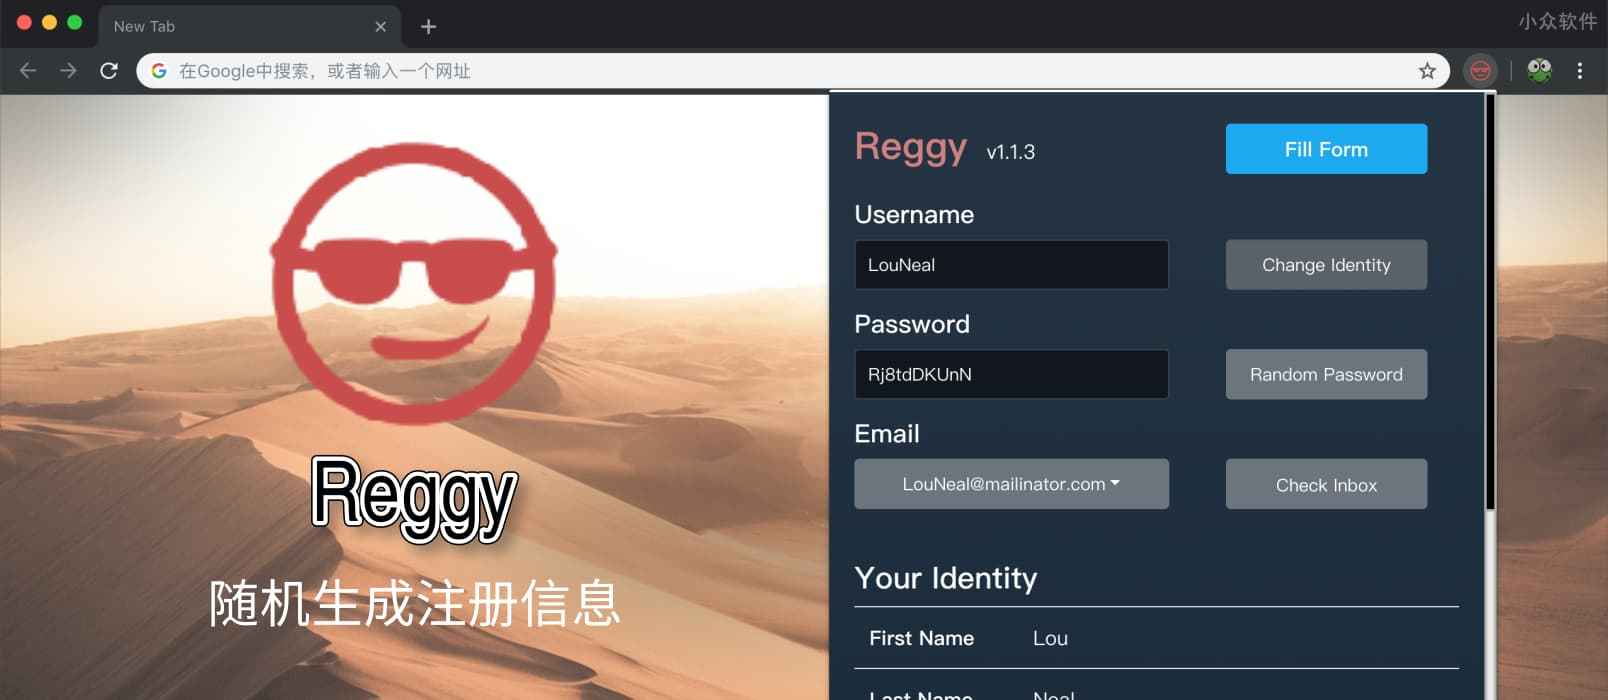 Reggy – 随机生成用户密码邮箱地址，一键填表，保护隐私[Chrome]